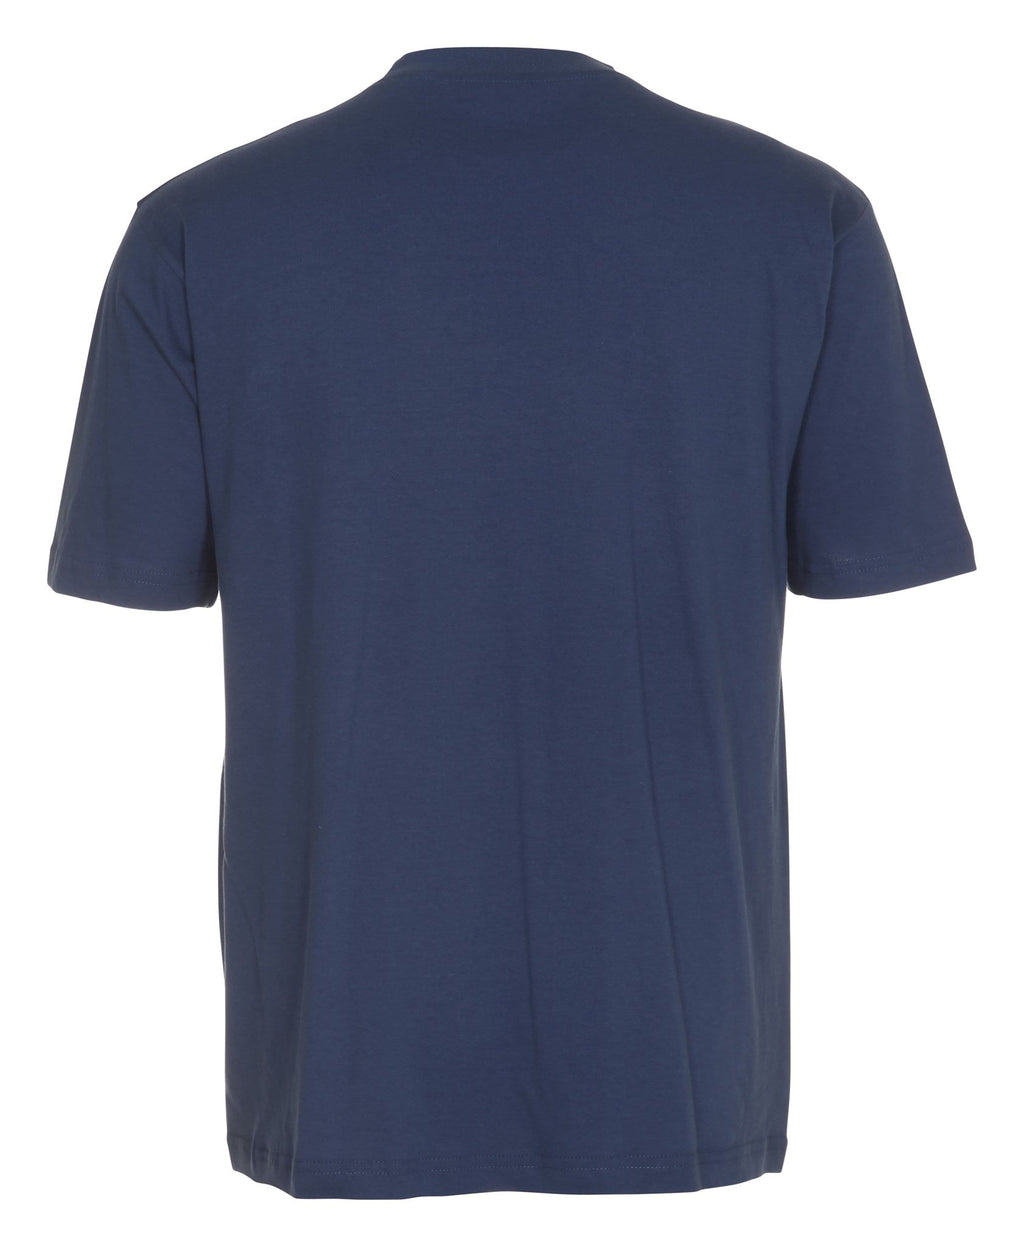 Predimenzionirana majica - lučka plava